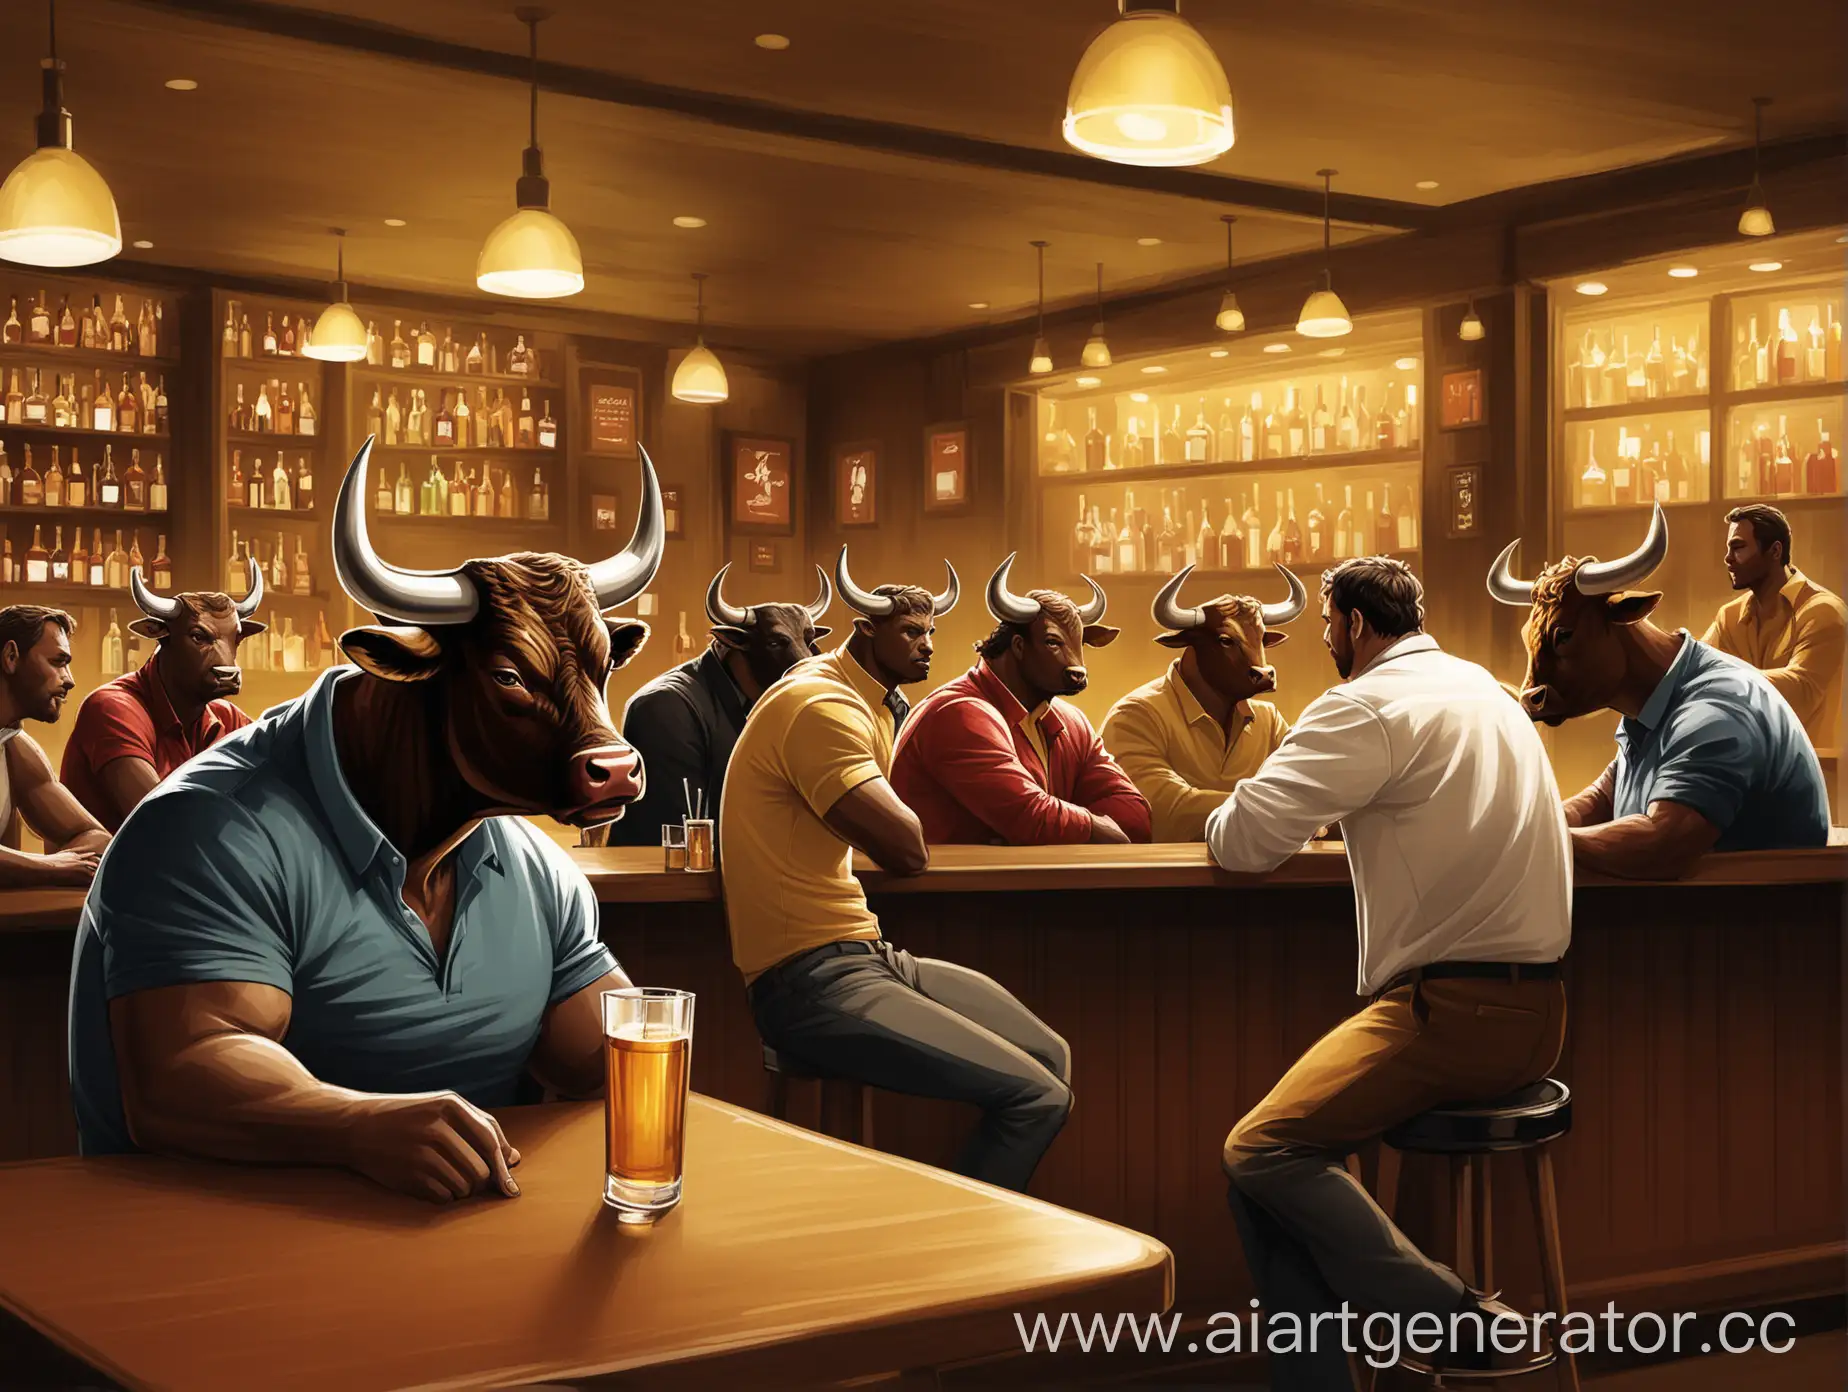 Bullish-Relaxation-Friendly-Gathering-of-Anthropomorphic-Bulls-in-a-Cozy-Bar-Setting